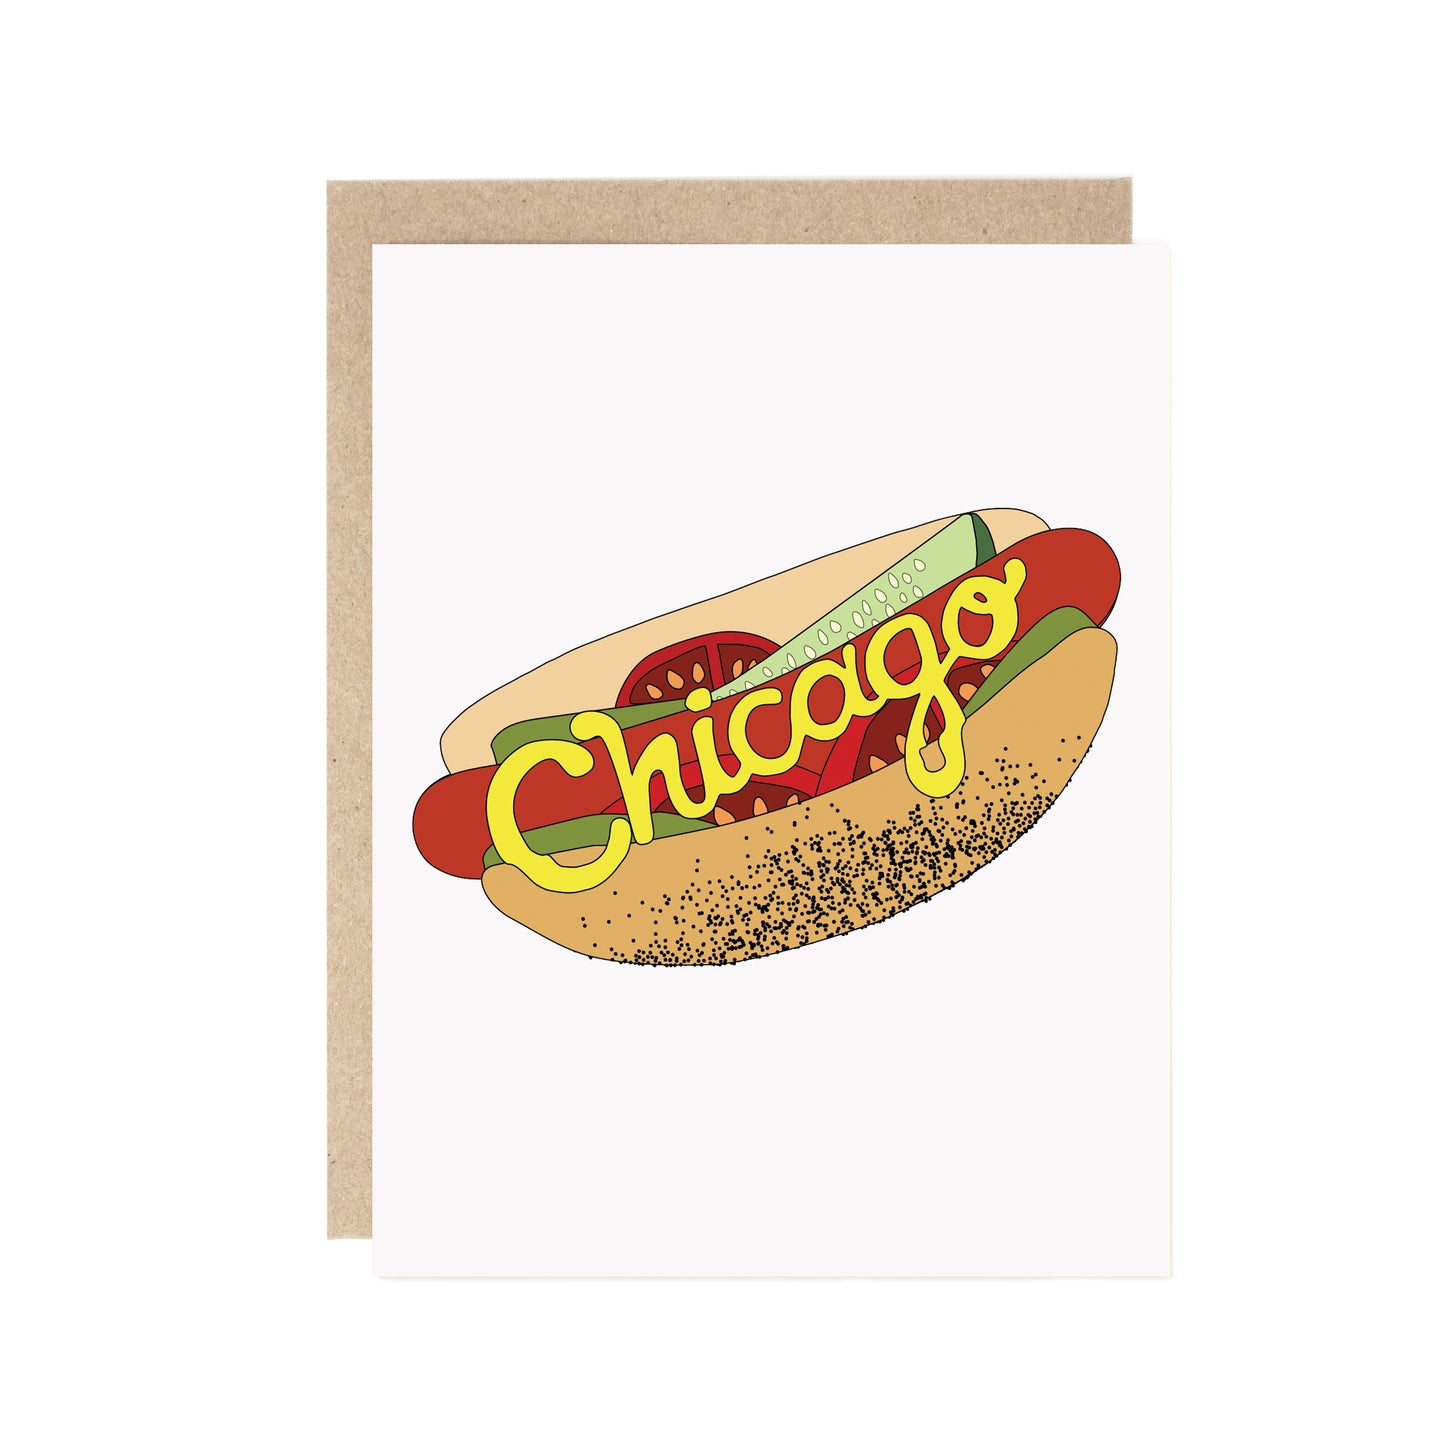 Chicago Hot Dog Illustrated Card